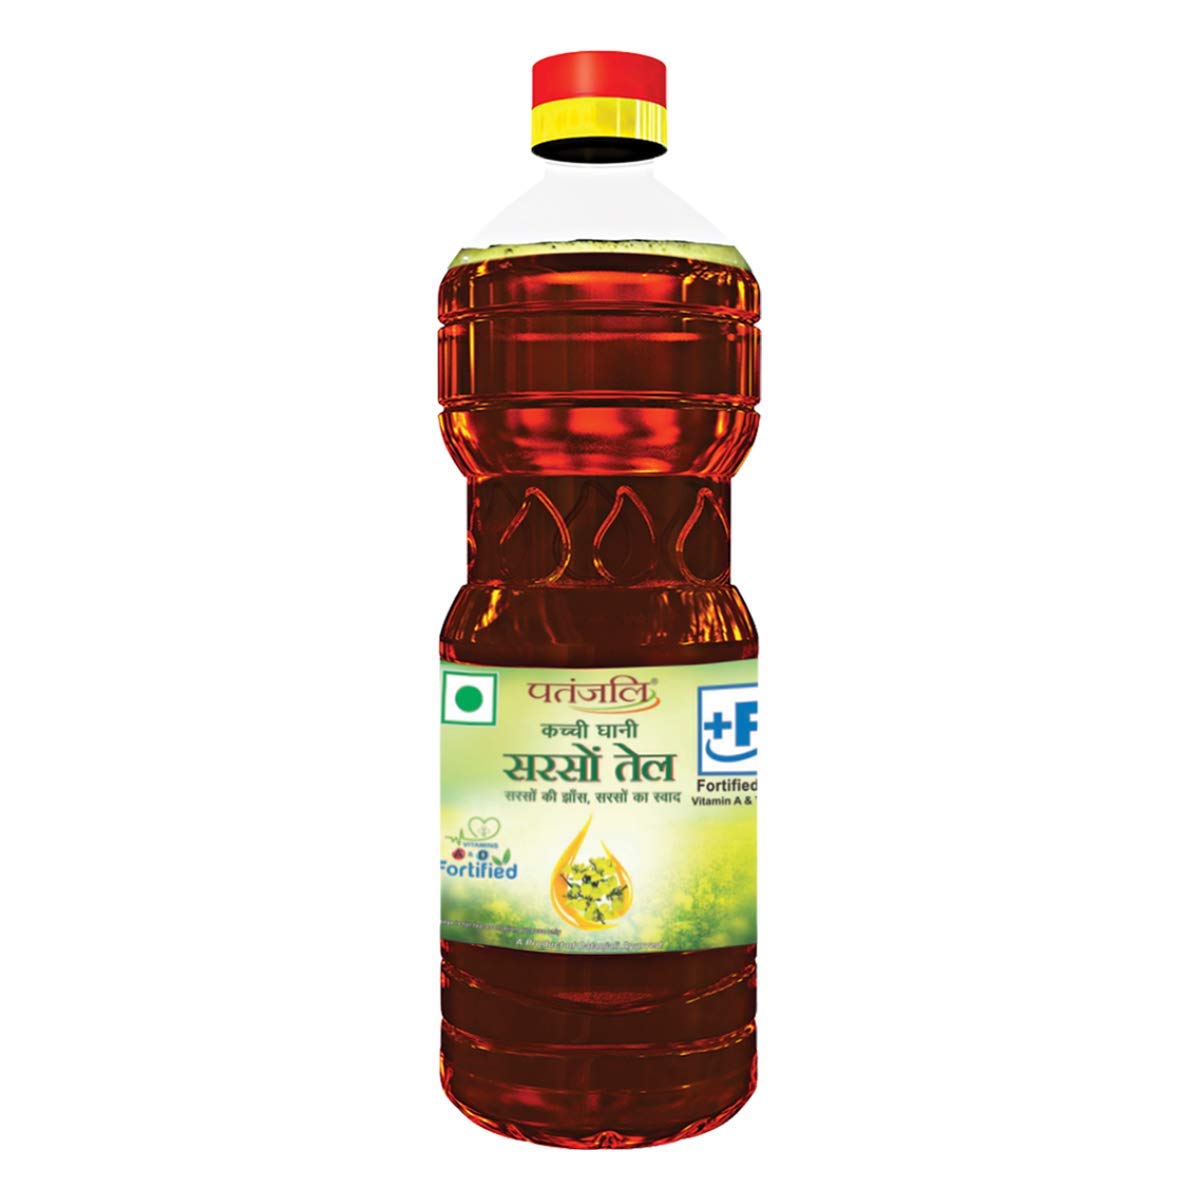 Patanjali Kachi Ghani Sarson Oil 1 Ltr Bottle